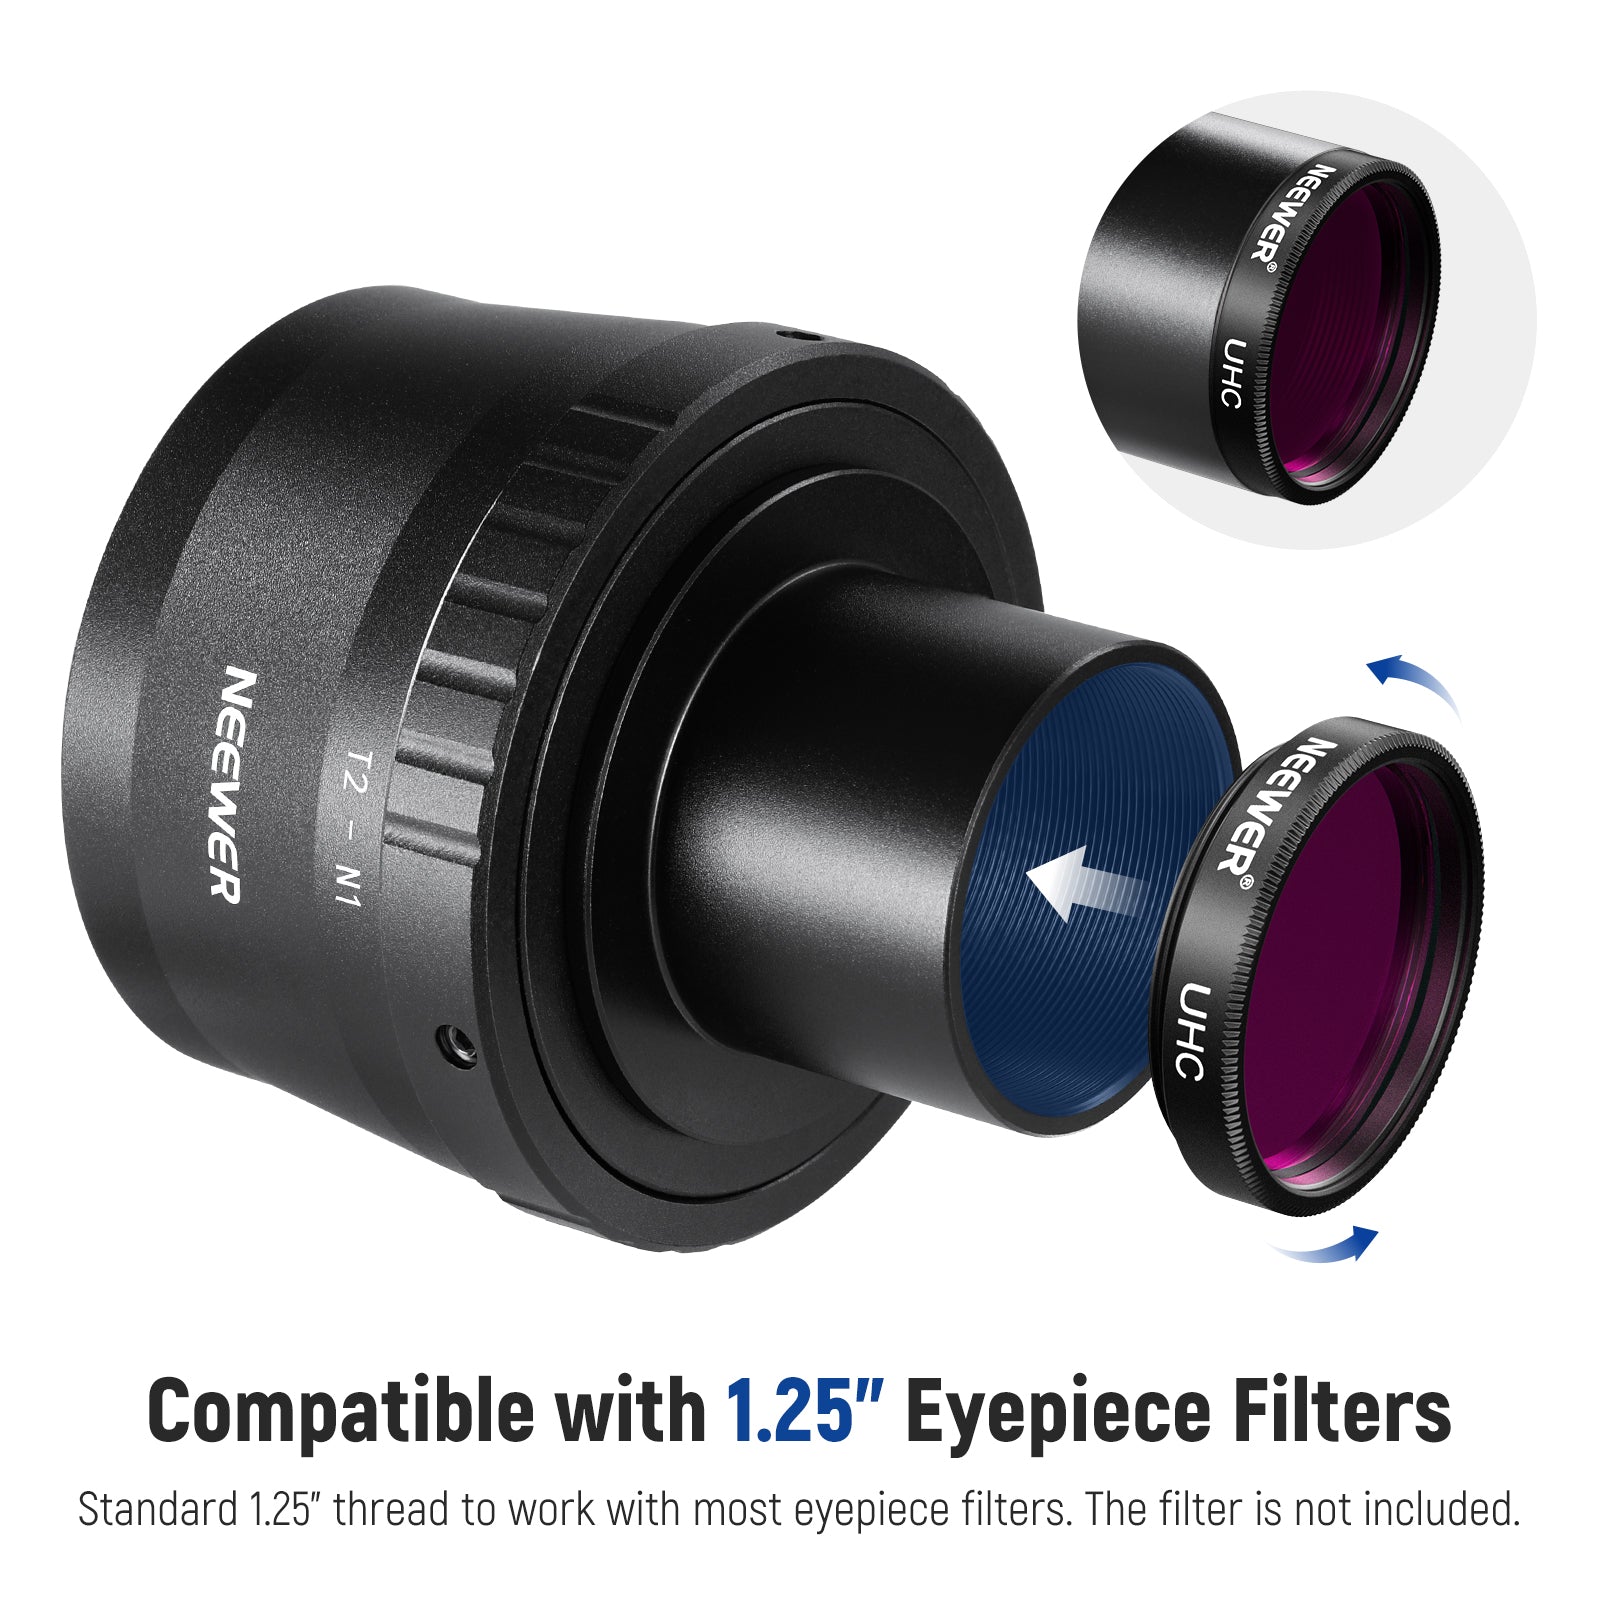 NEEWER LS-T10 T Ring Adapter Set for Nikon 1 Series Mirrorless Cameras